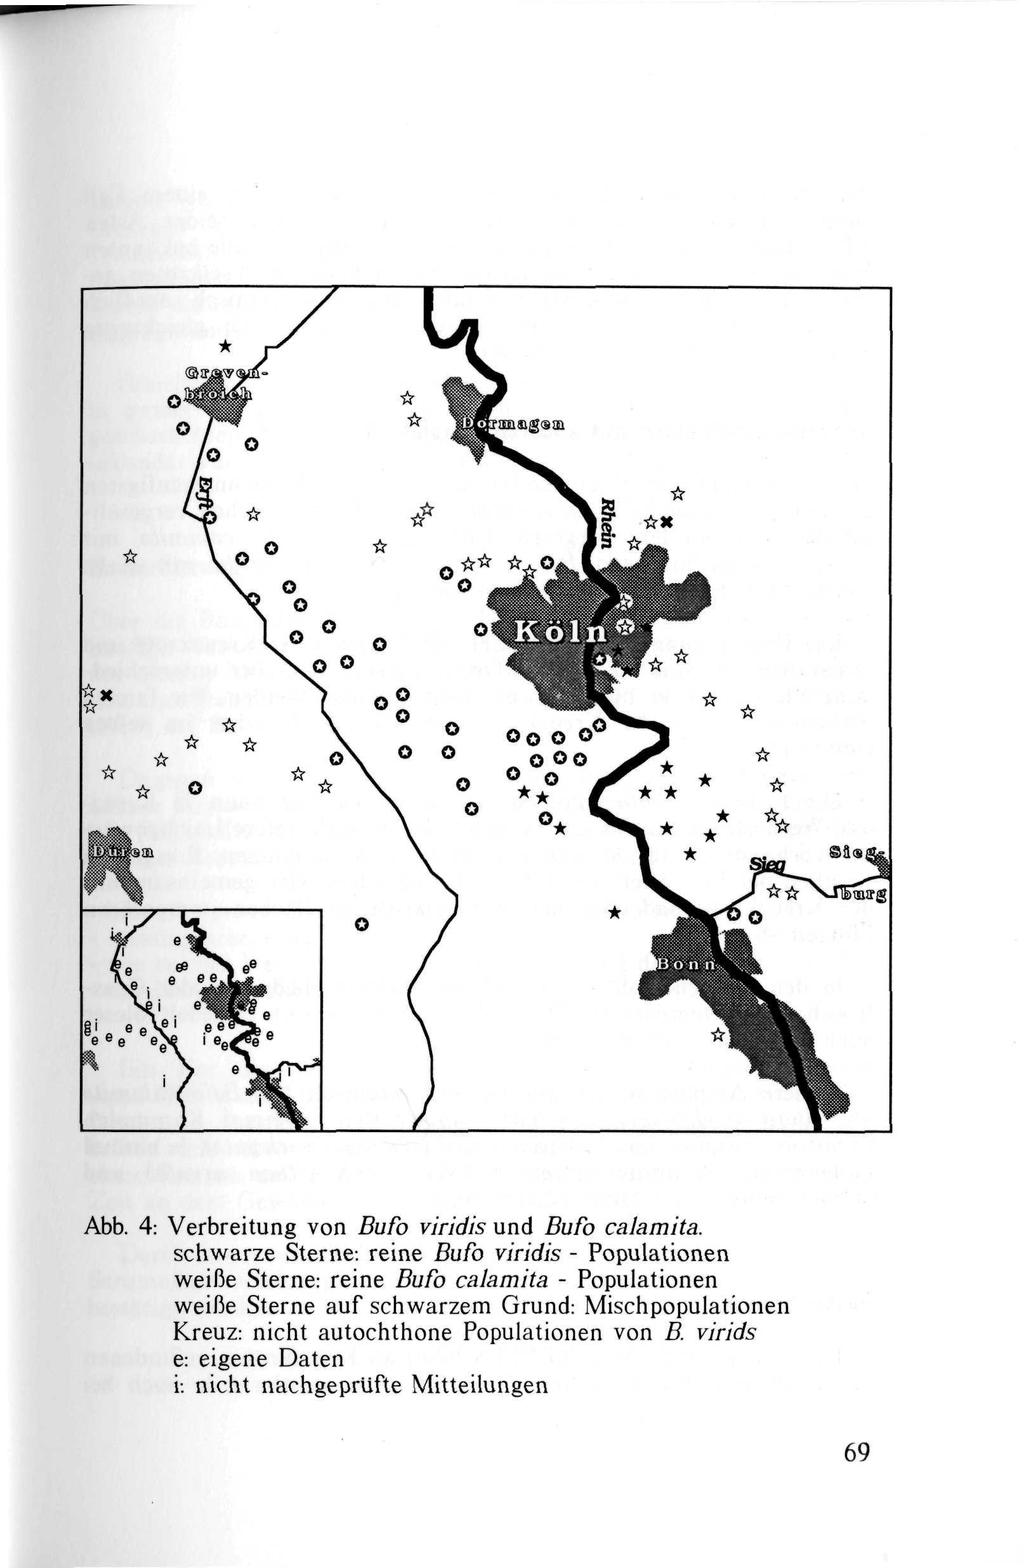 Abb. 4: Verbreitung von Bufo viridis und Bufo calamita.